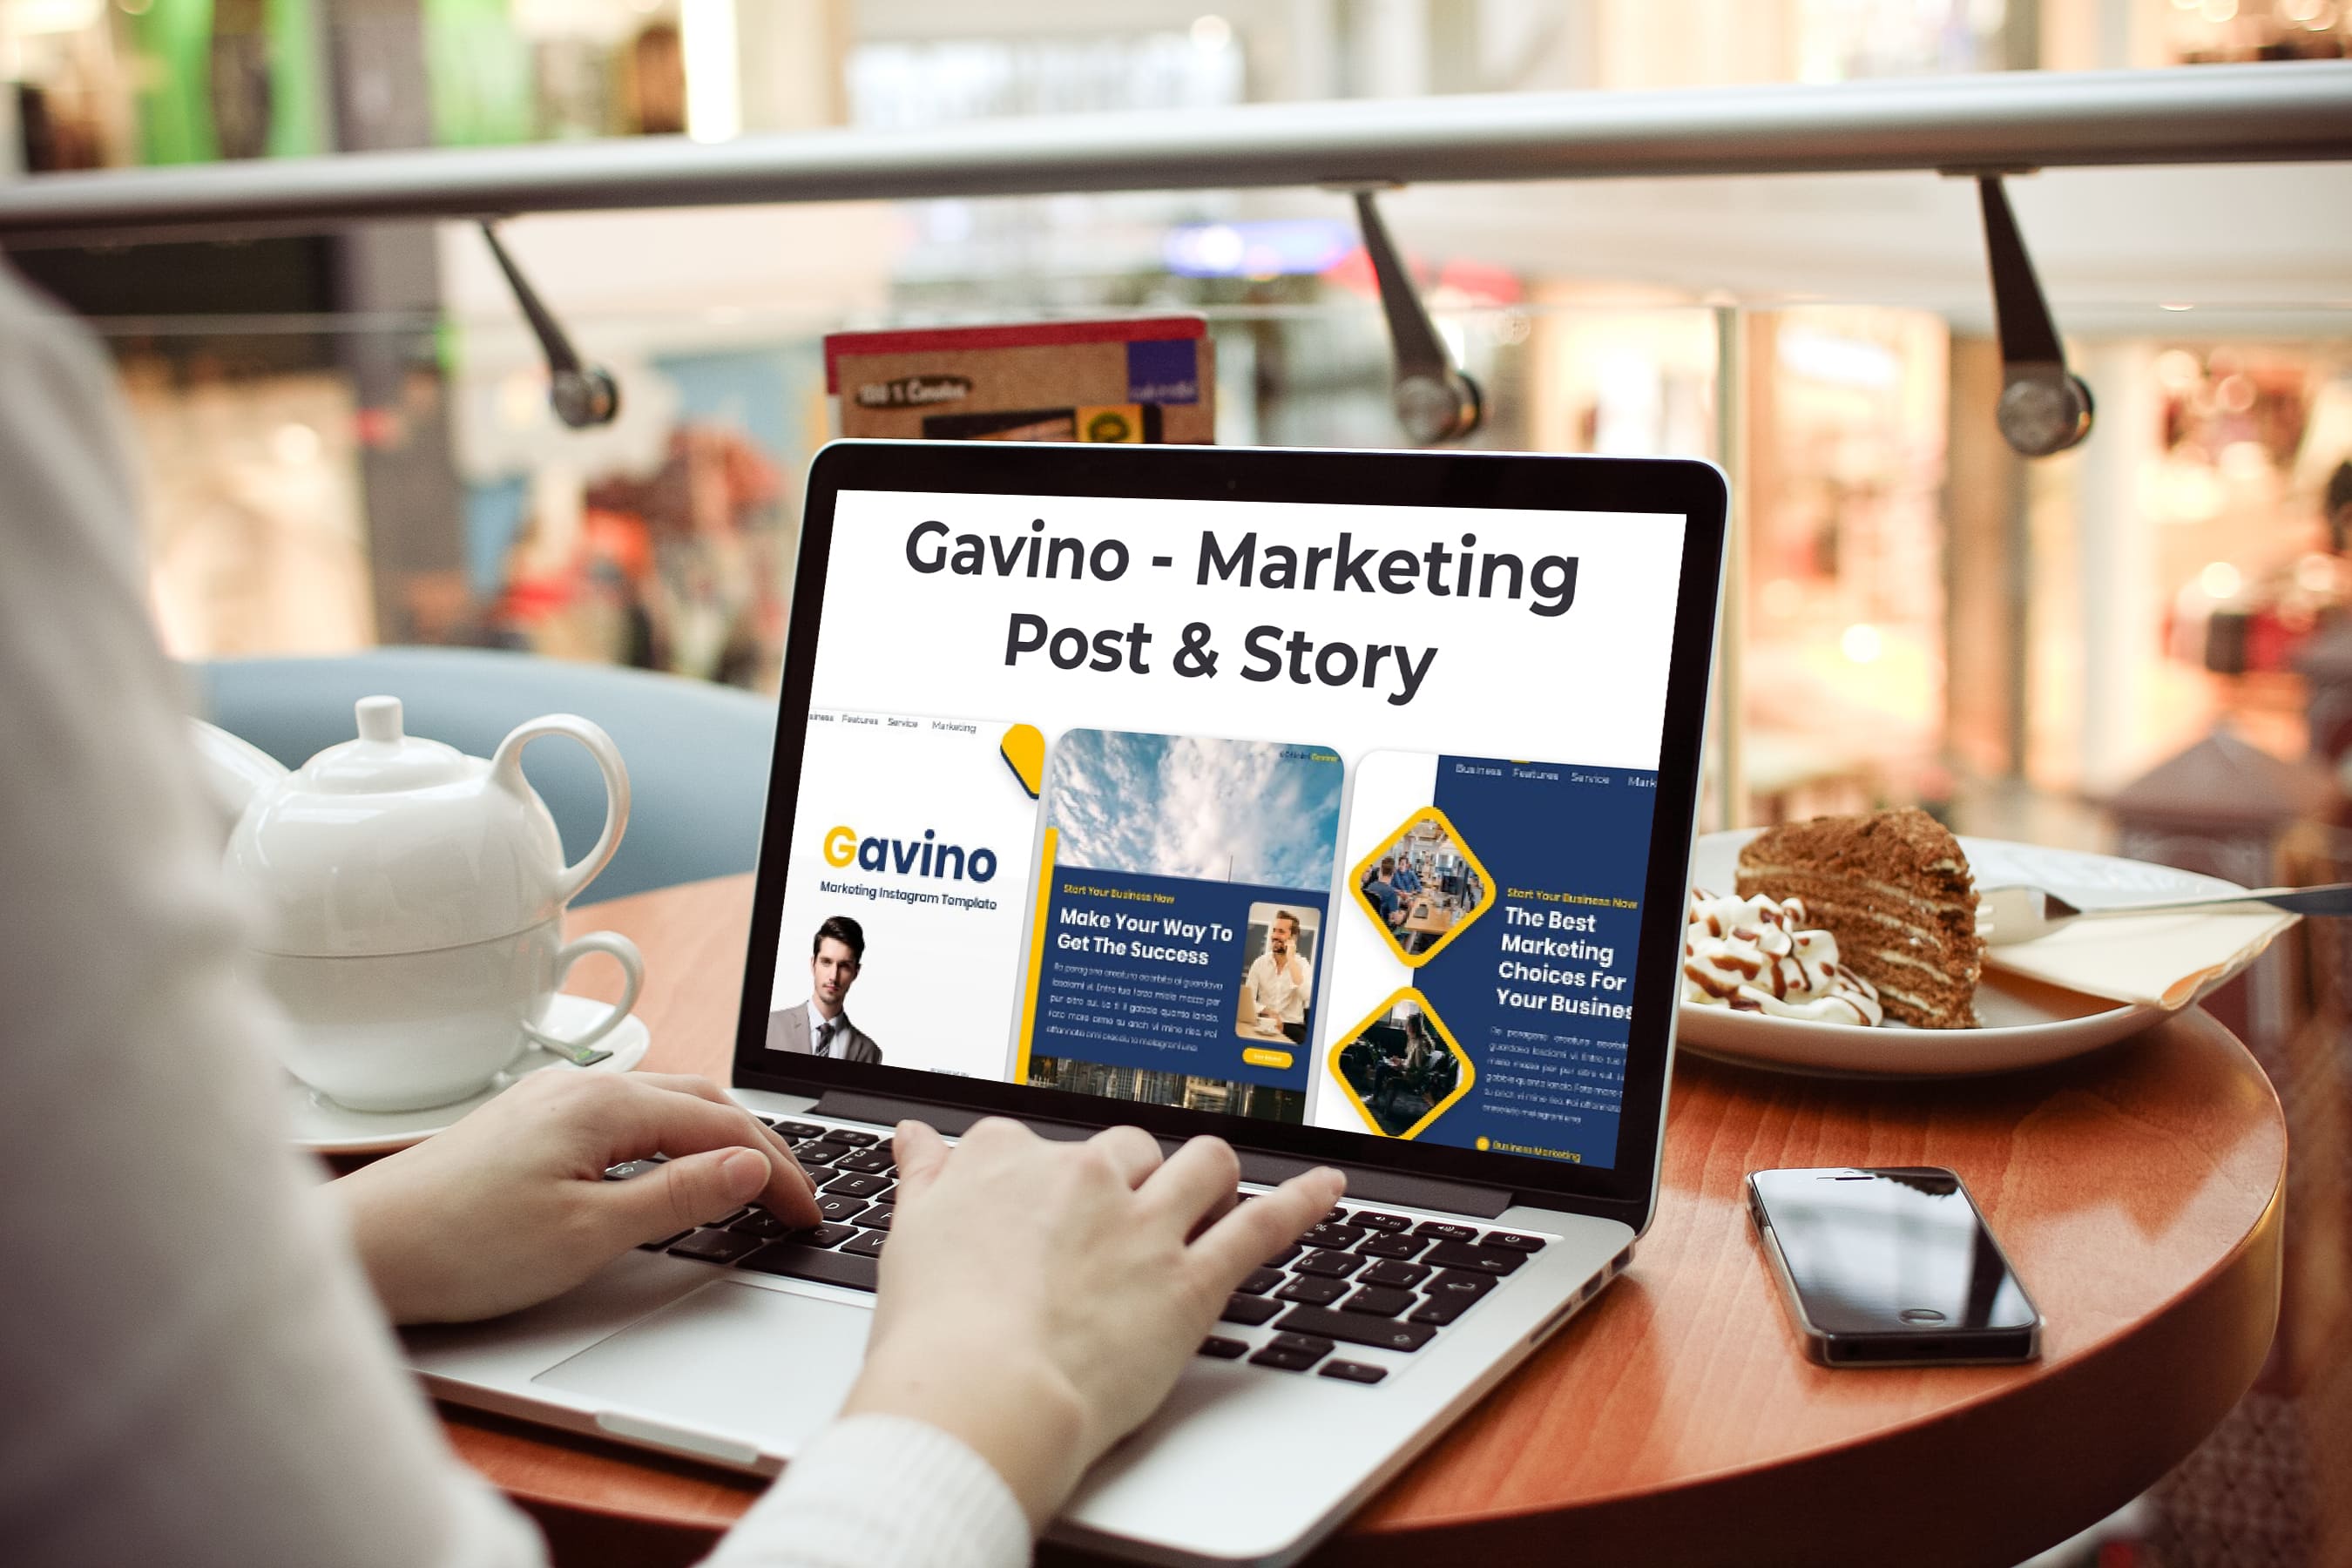 Laptop option of the Gavino - Marketing Post & Story.